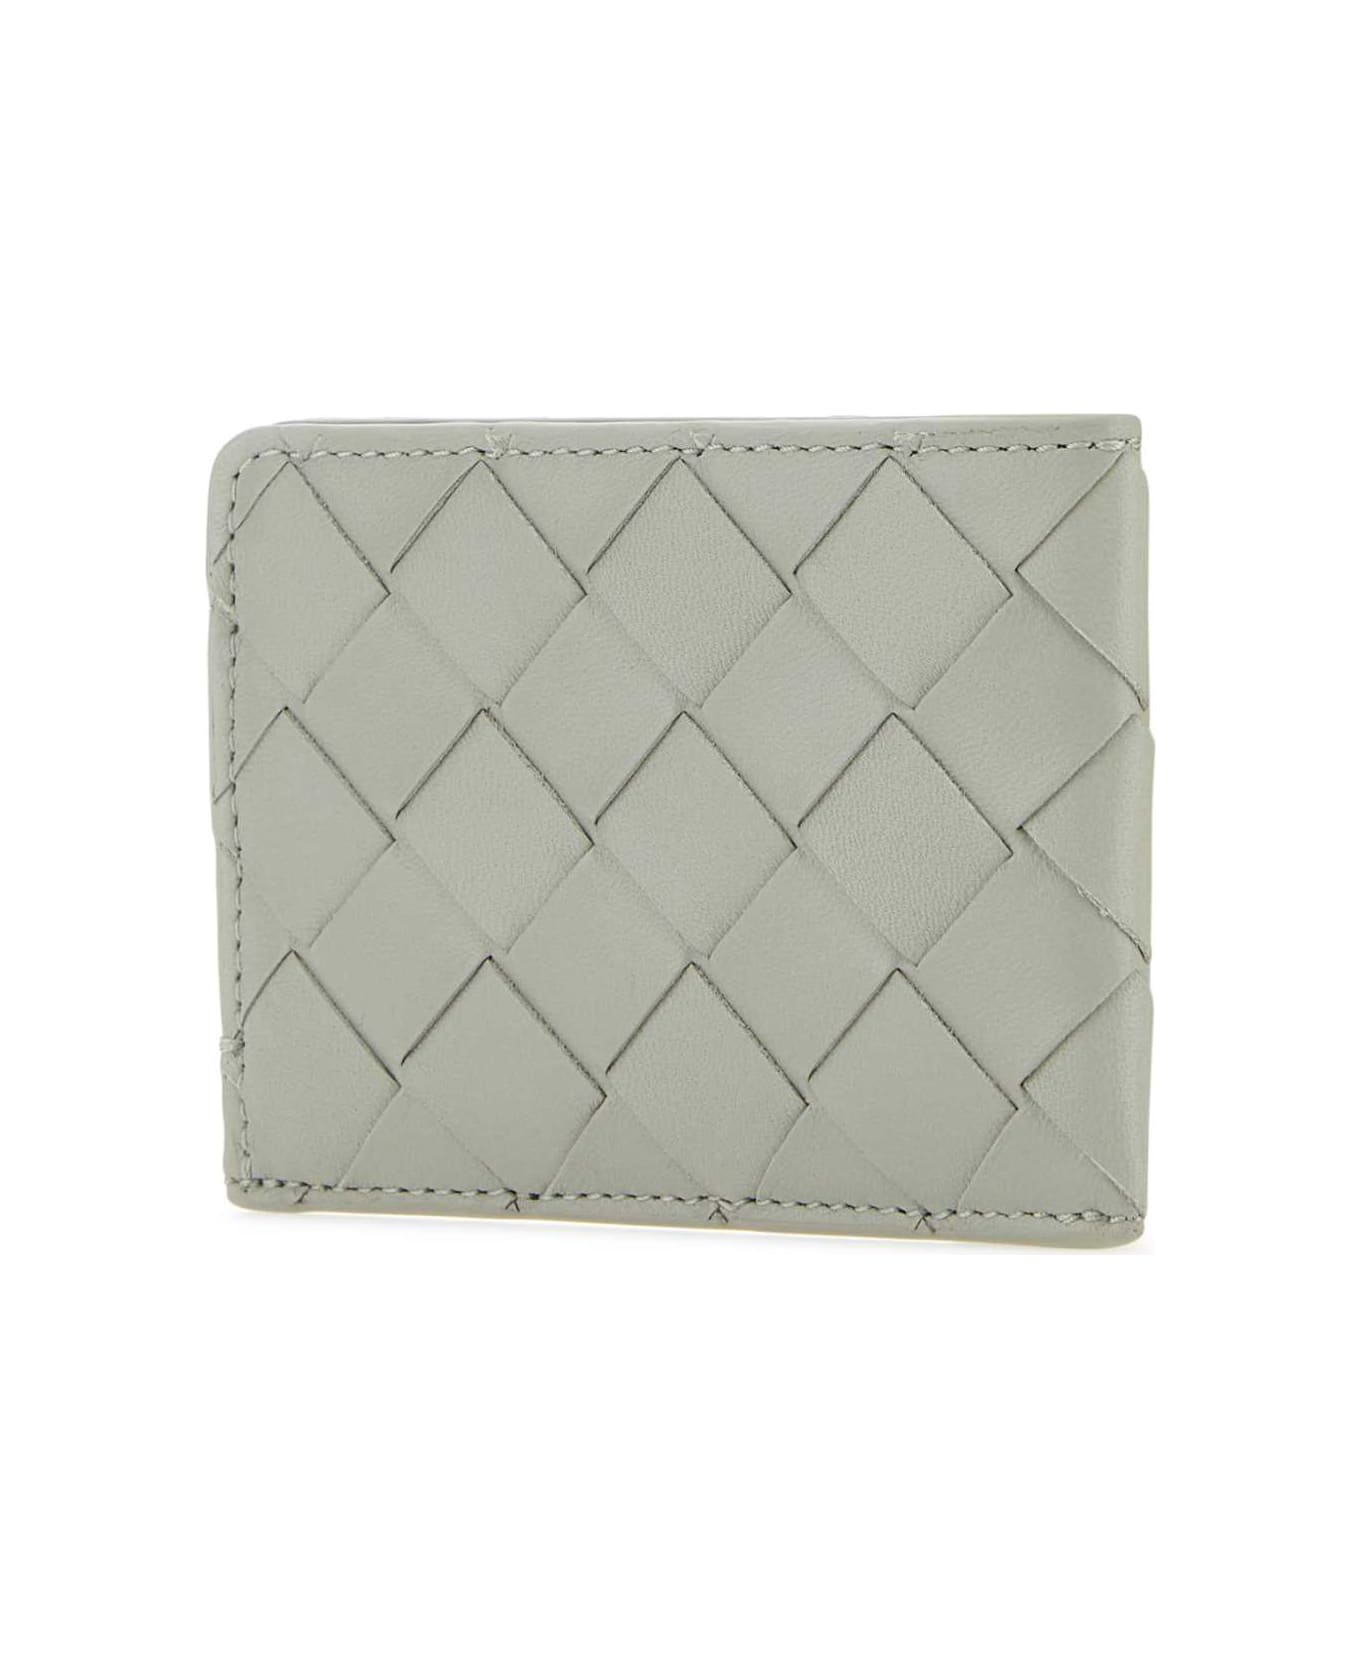 Bottega Veneta Light Grey Leather Card Holder - AGATEGREYGOLD